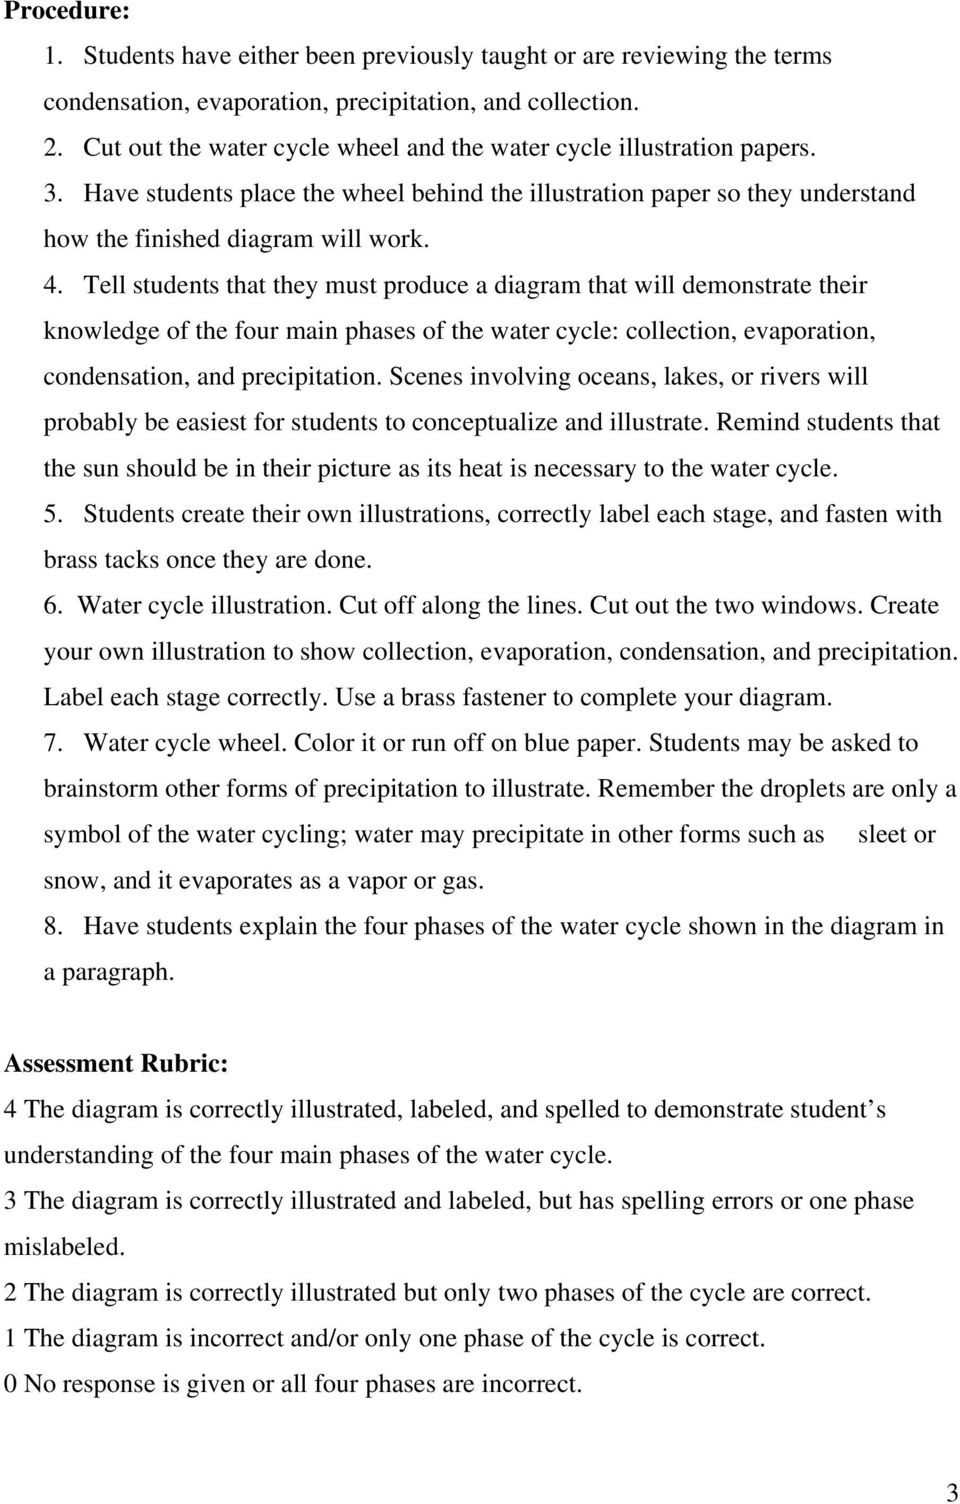 Water Cycle Worksheet Middle School Britt sorensen Grade 4 Teacher Louis F Angelo School Water